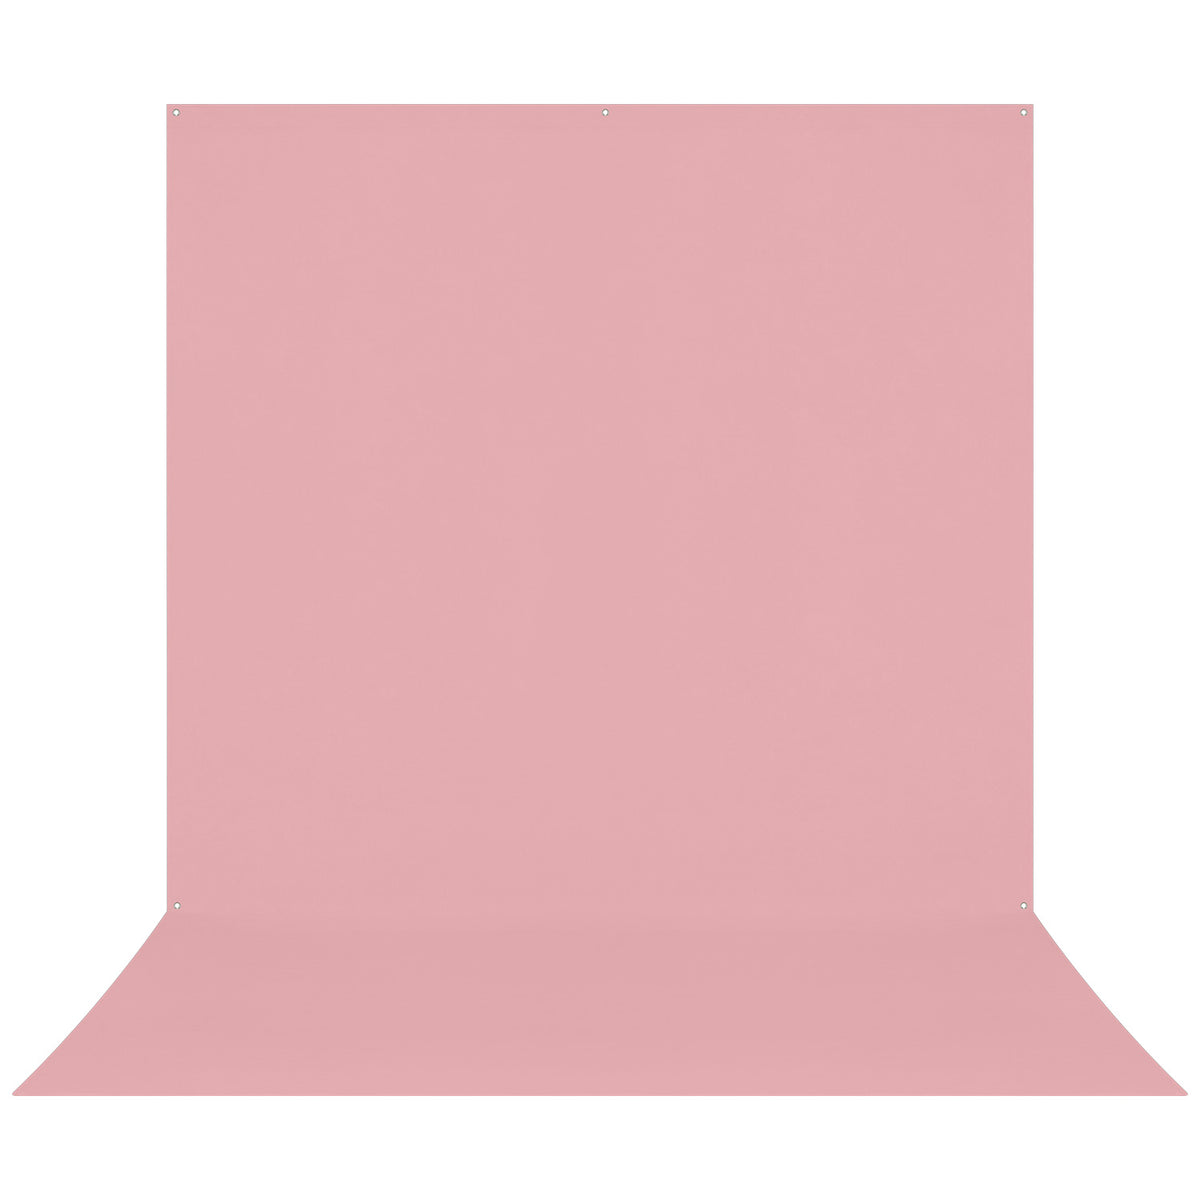 X-Drop Pro Wrinkle-Resistant Backdrop - Blush Pink (8' x 13')